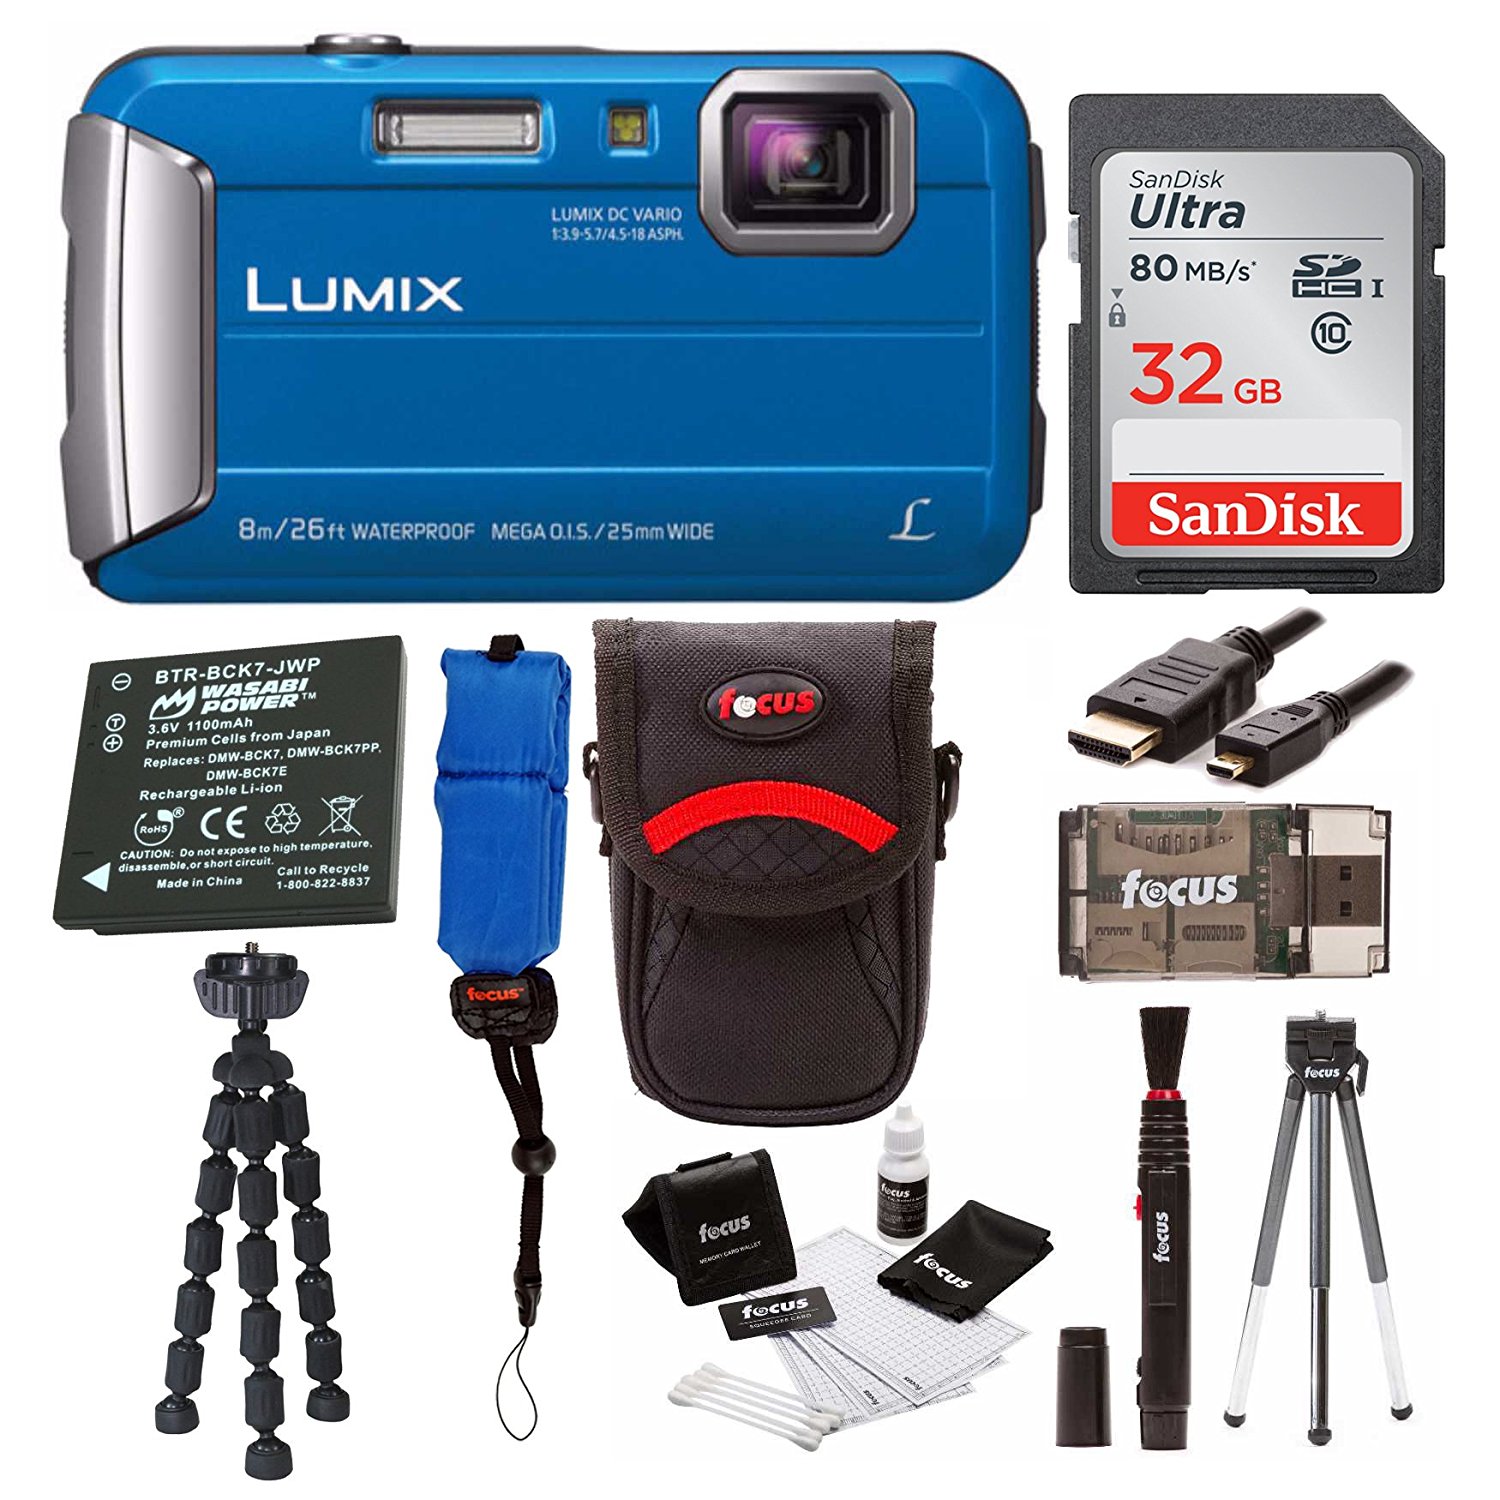 Panasonic Lumix DMC-TS30 Digital Camera (Premium, Blue)